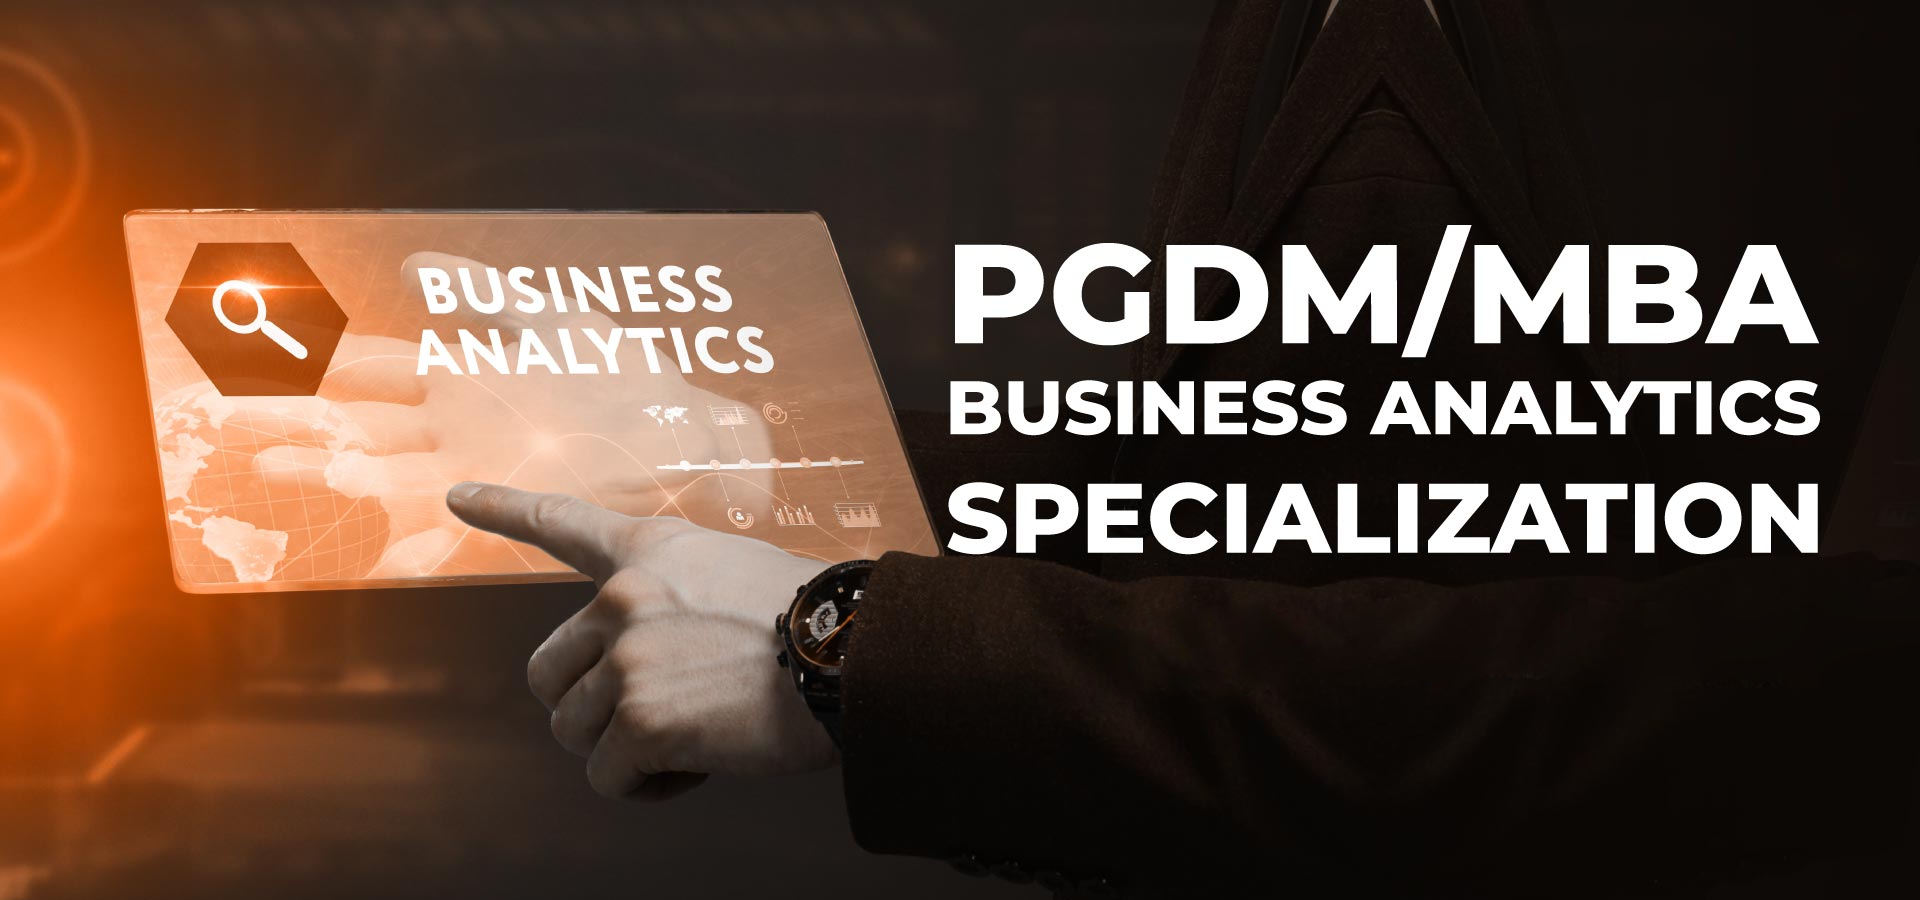 PGDM MBA Business Analytics Specialization